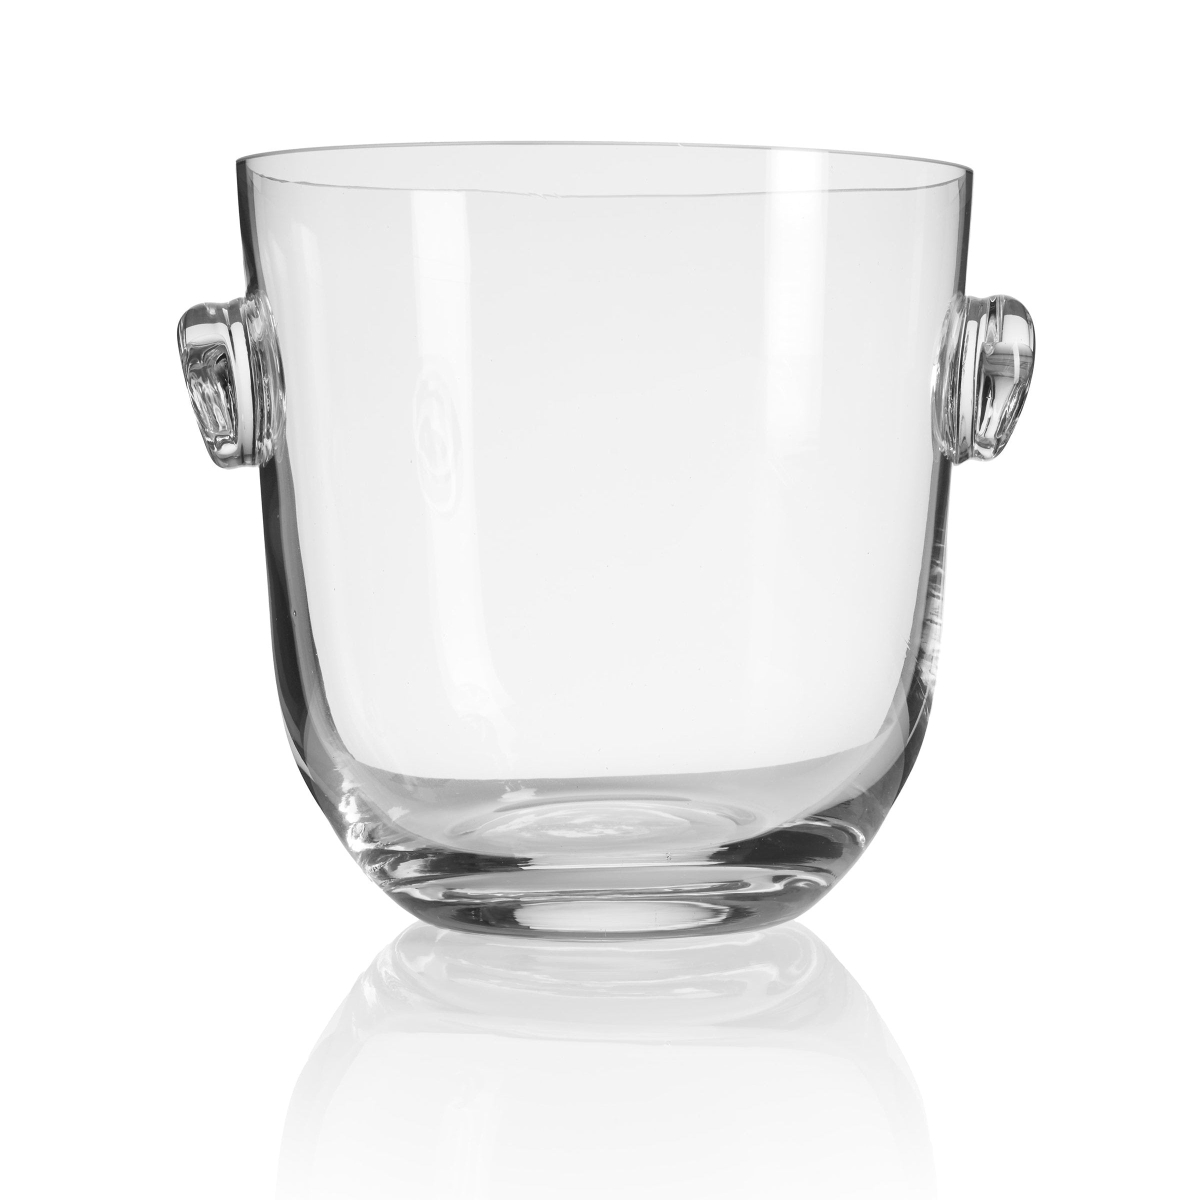 Picture of Godinger 27917 SB3 Braga Ice Bucket